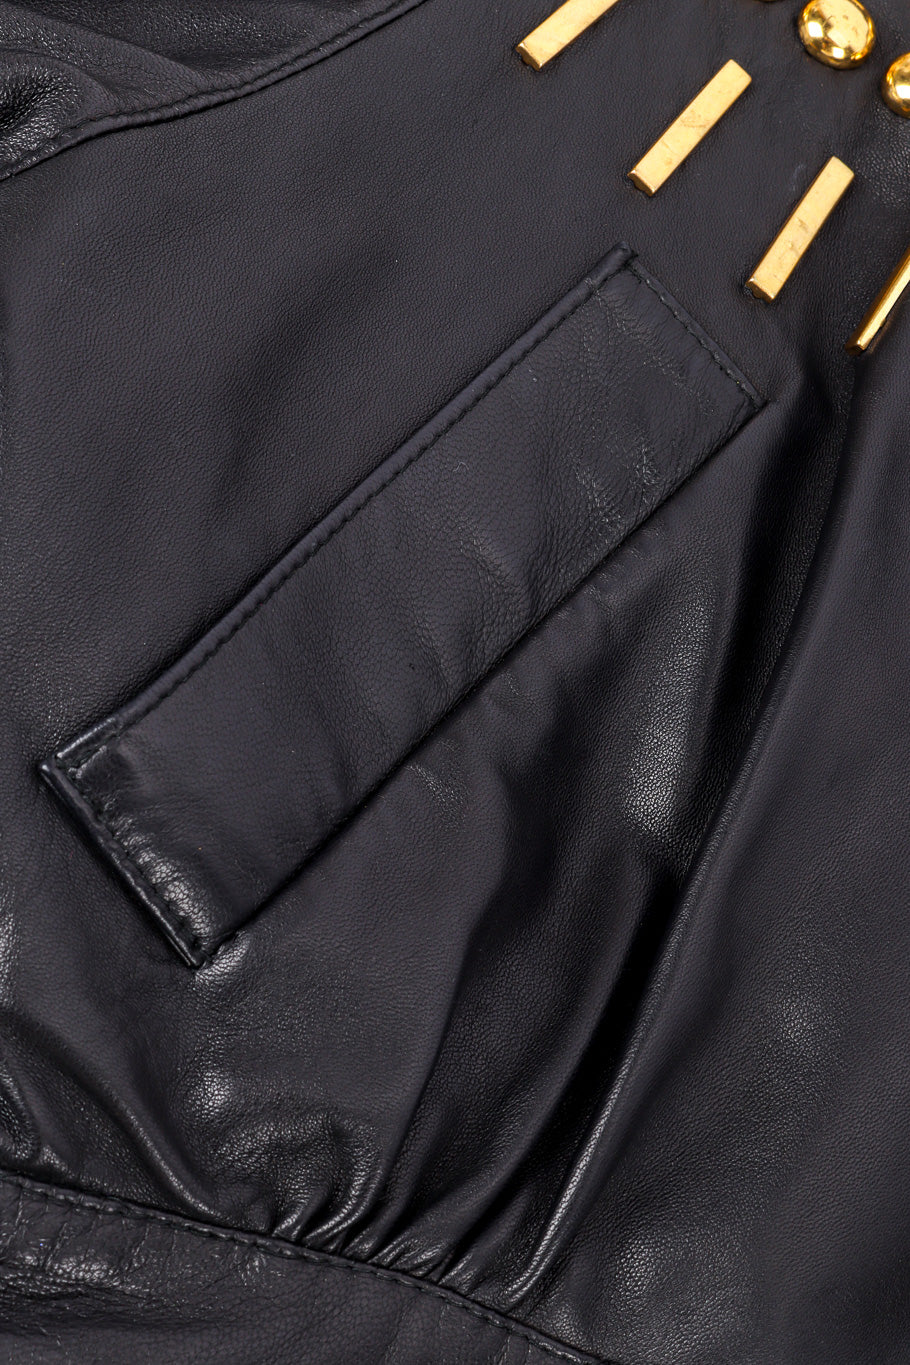 Vintage Lina Lee Studded Leather Jacket pocket closeup @recessla